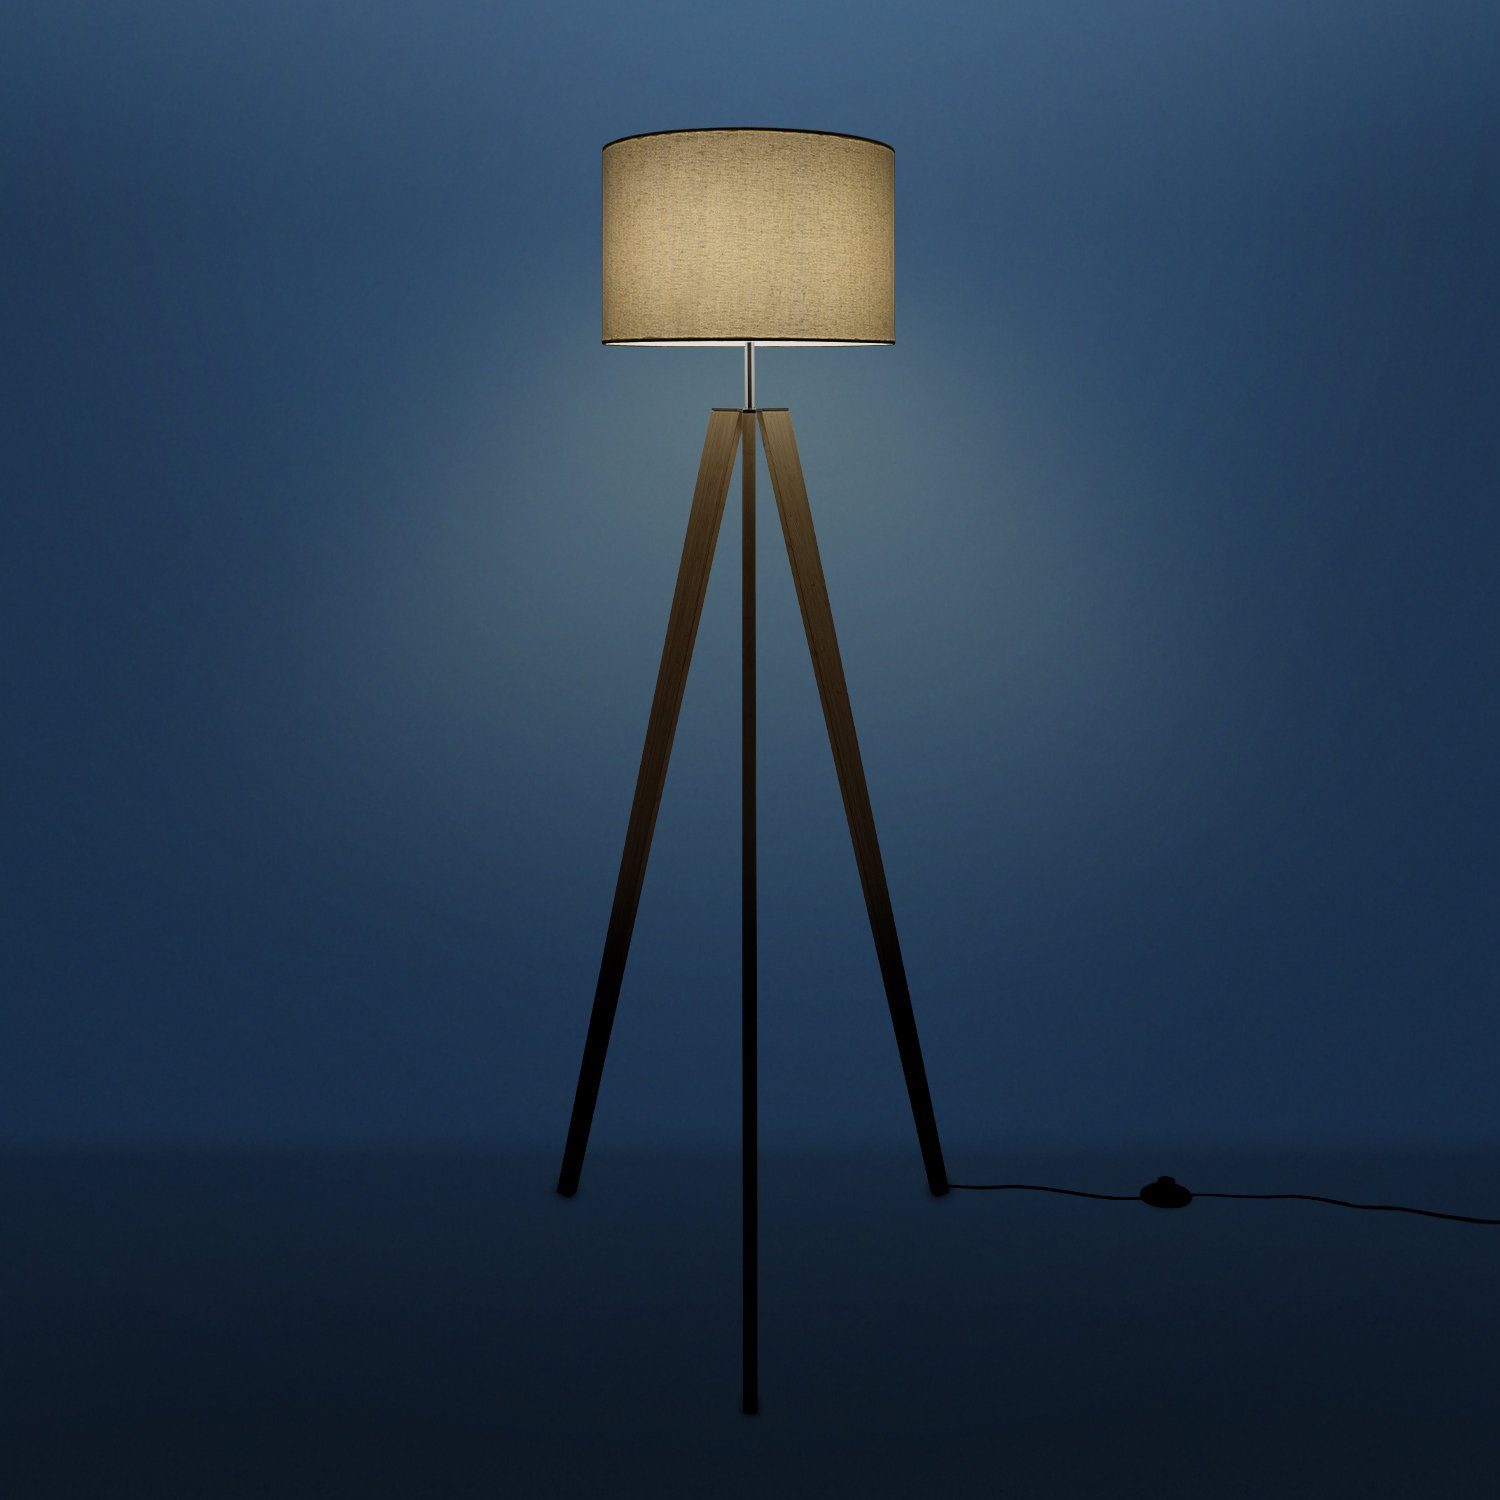 Paco Home Fuß E27 Stehlampe LED Stehlampe Lampe Stil Canvas Color, Skandinavischer ohne Leuchtmittel, Wohnzimmer uni Vintage